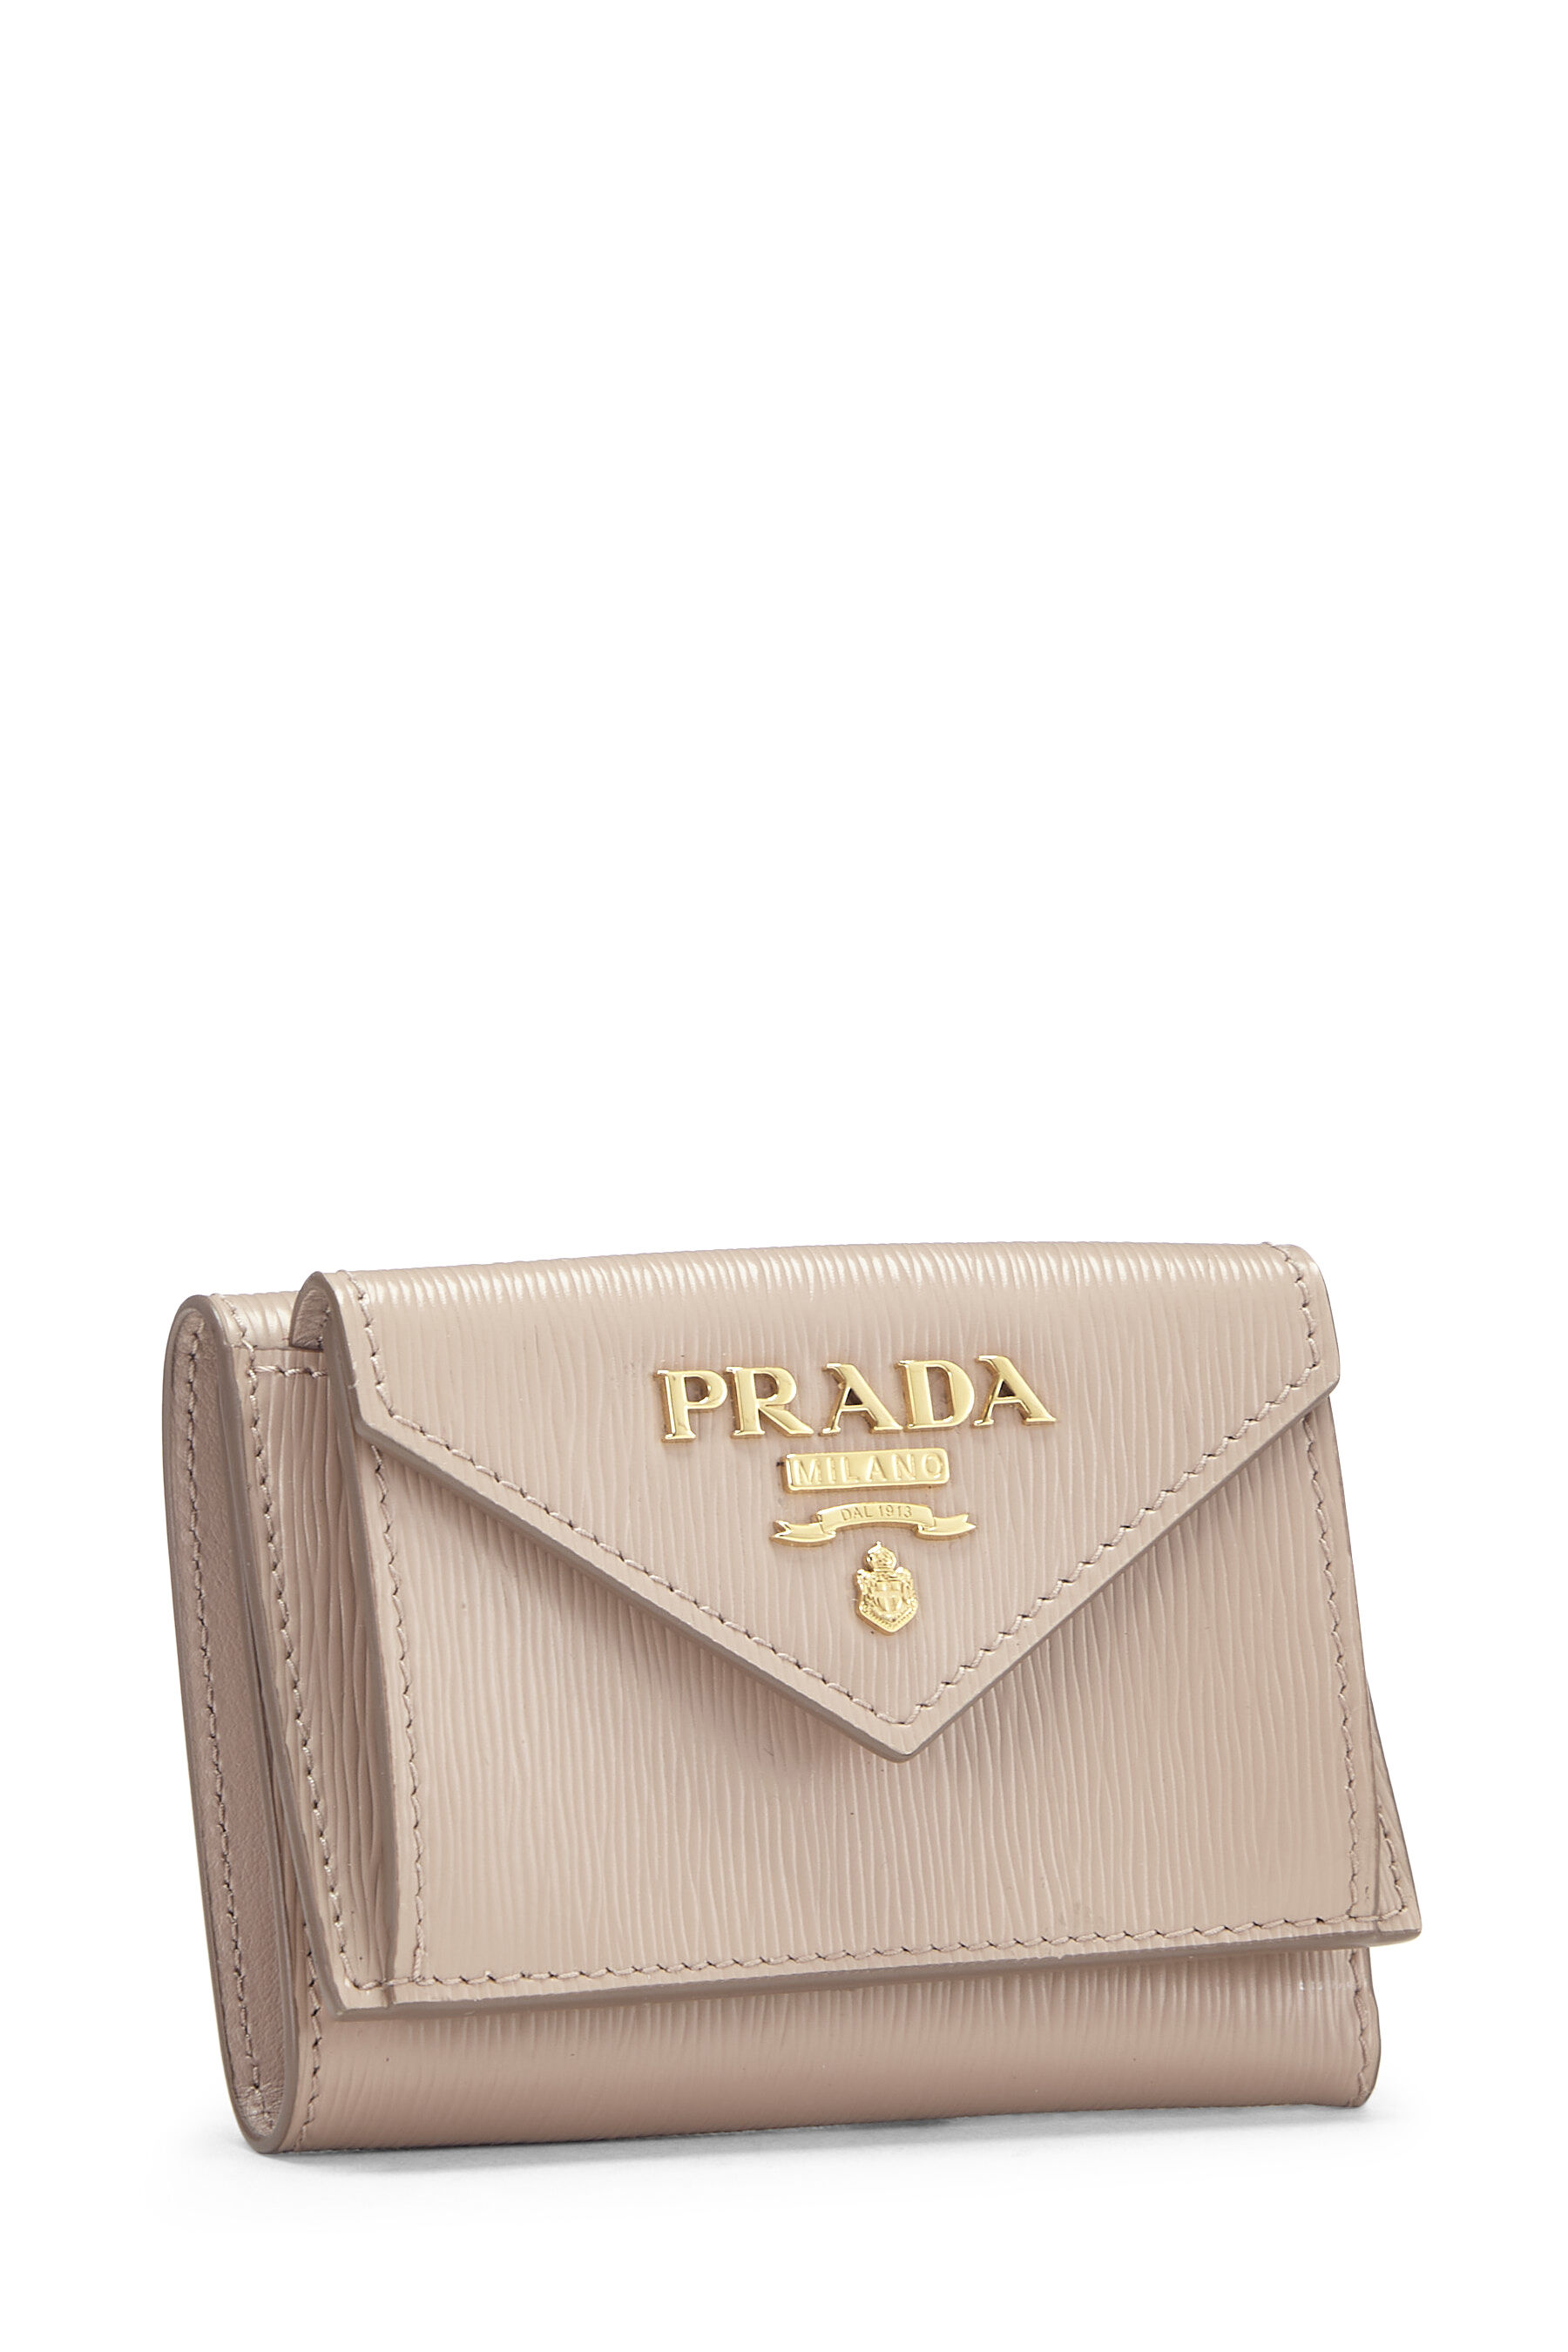 Prada Vitello Move Peonia Pink Leather Small Chain Wallet